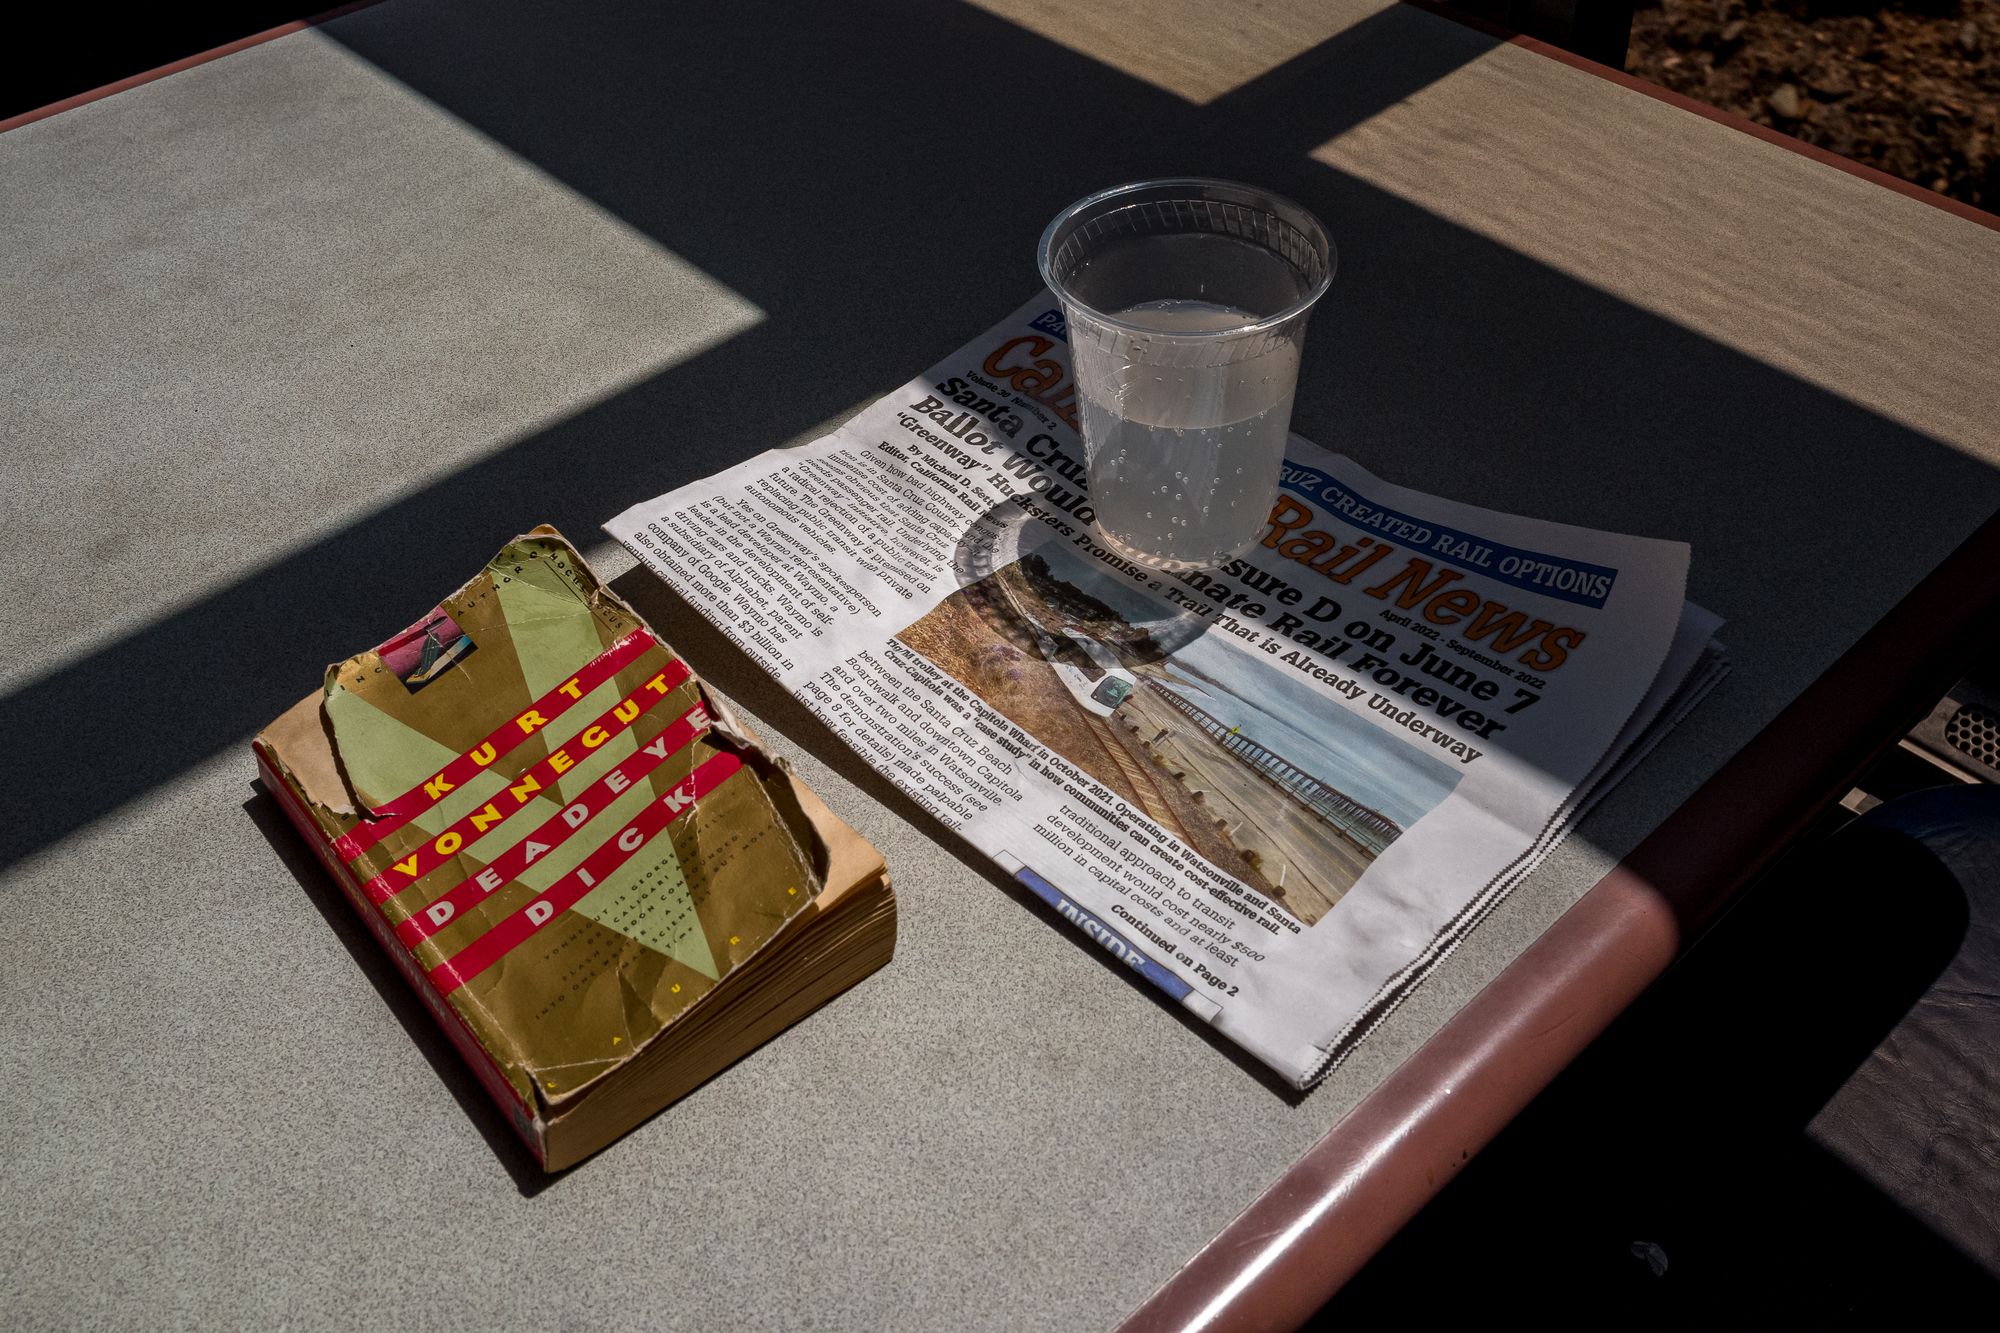 Amtrak passenger book, newspaper, and soda